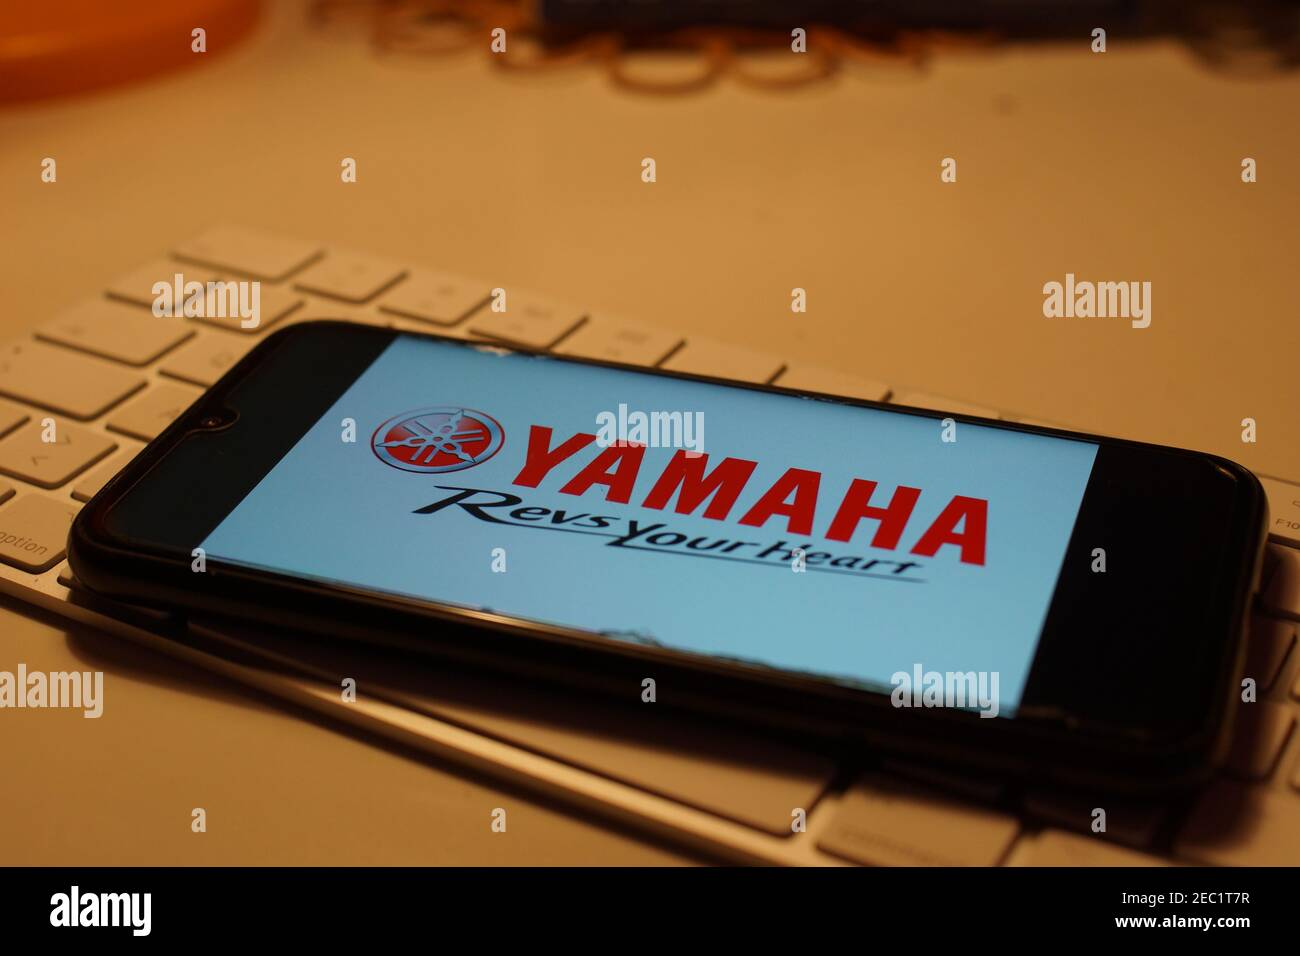 Smartphone with Yamaha logo on computer keyboard Stock Photo